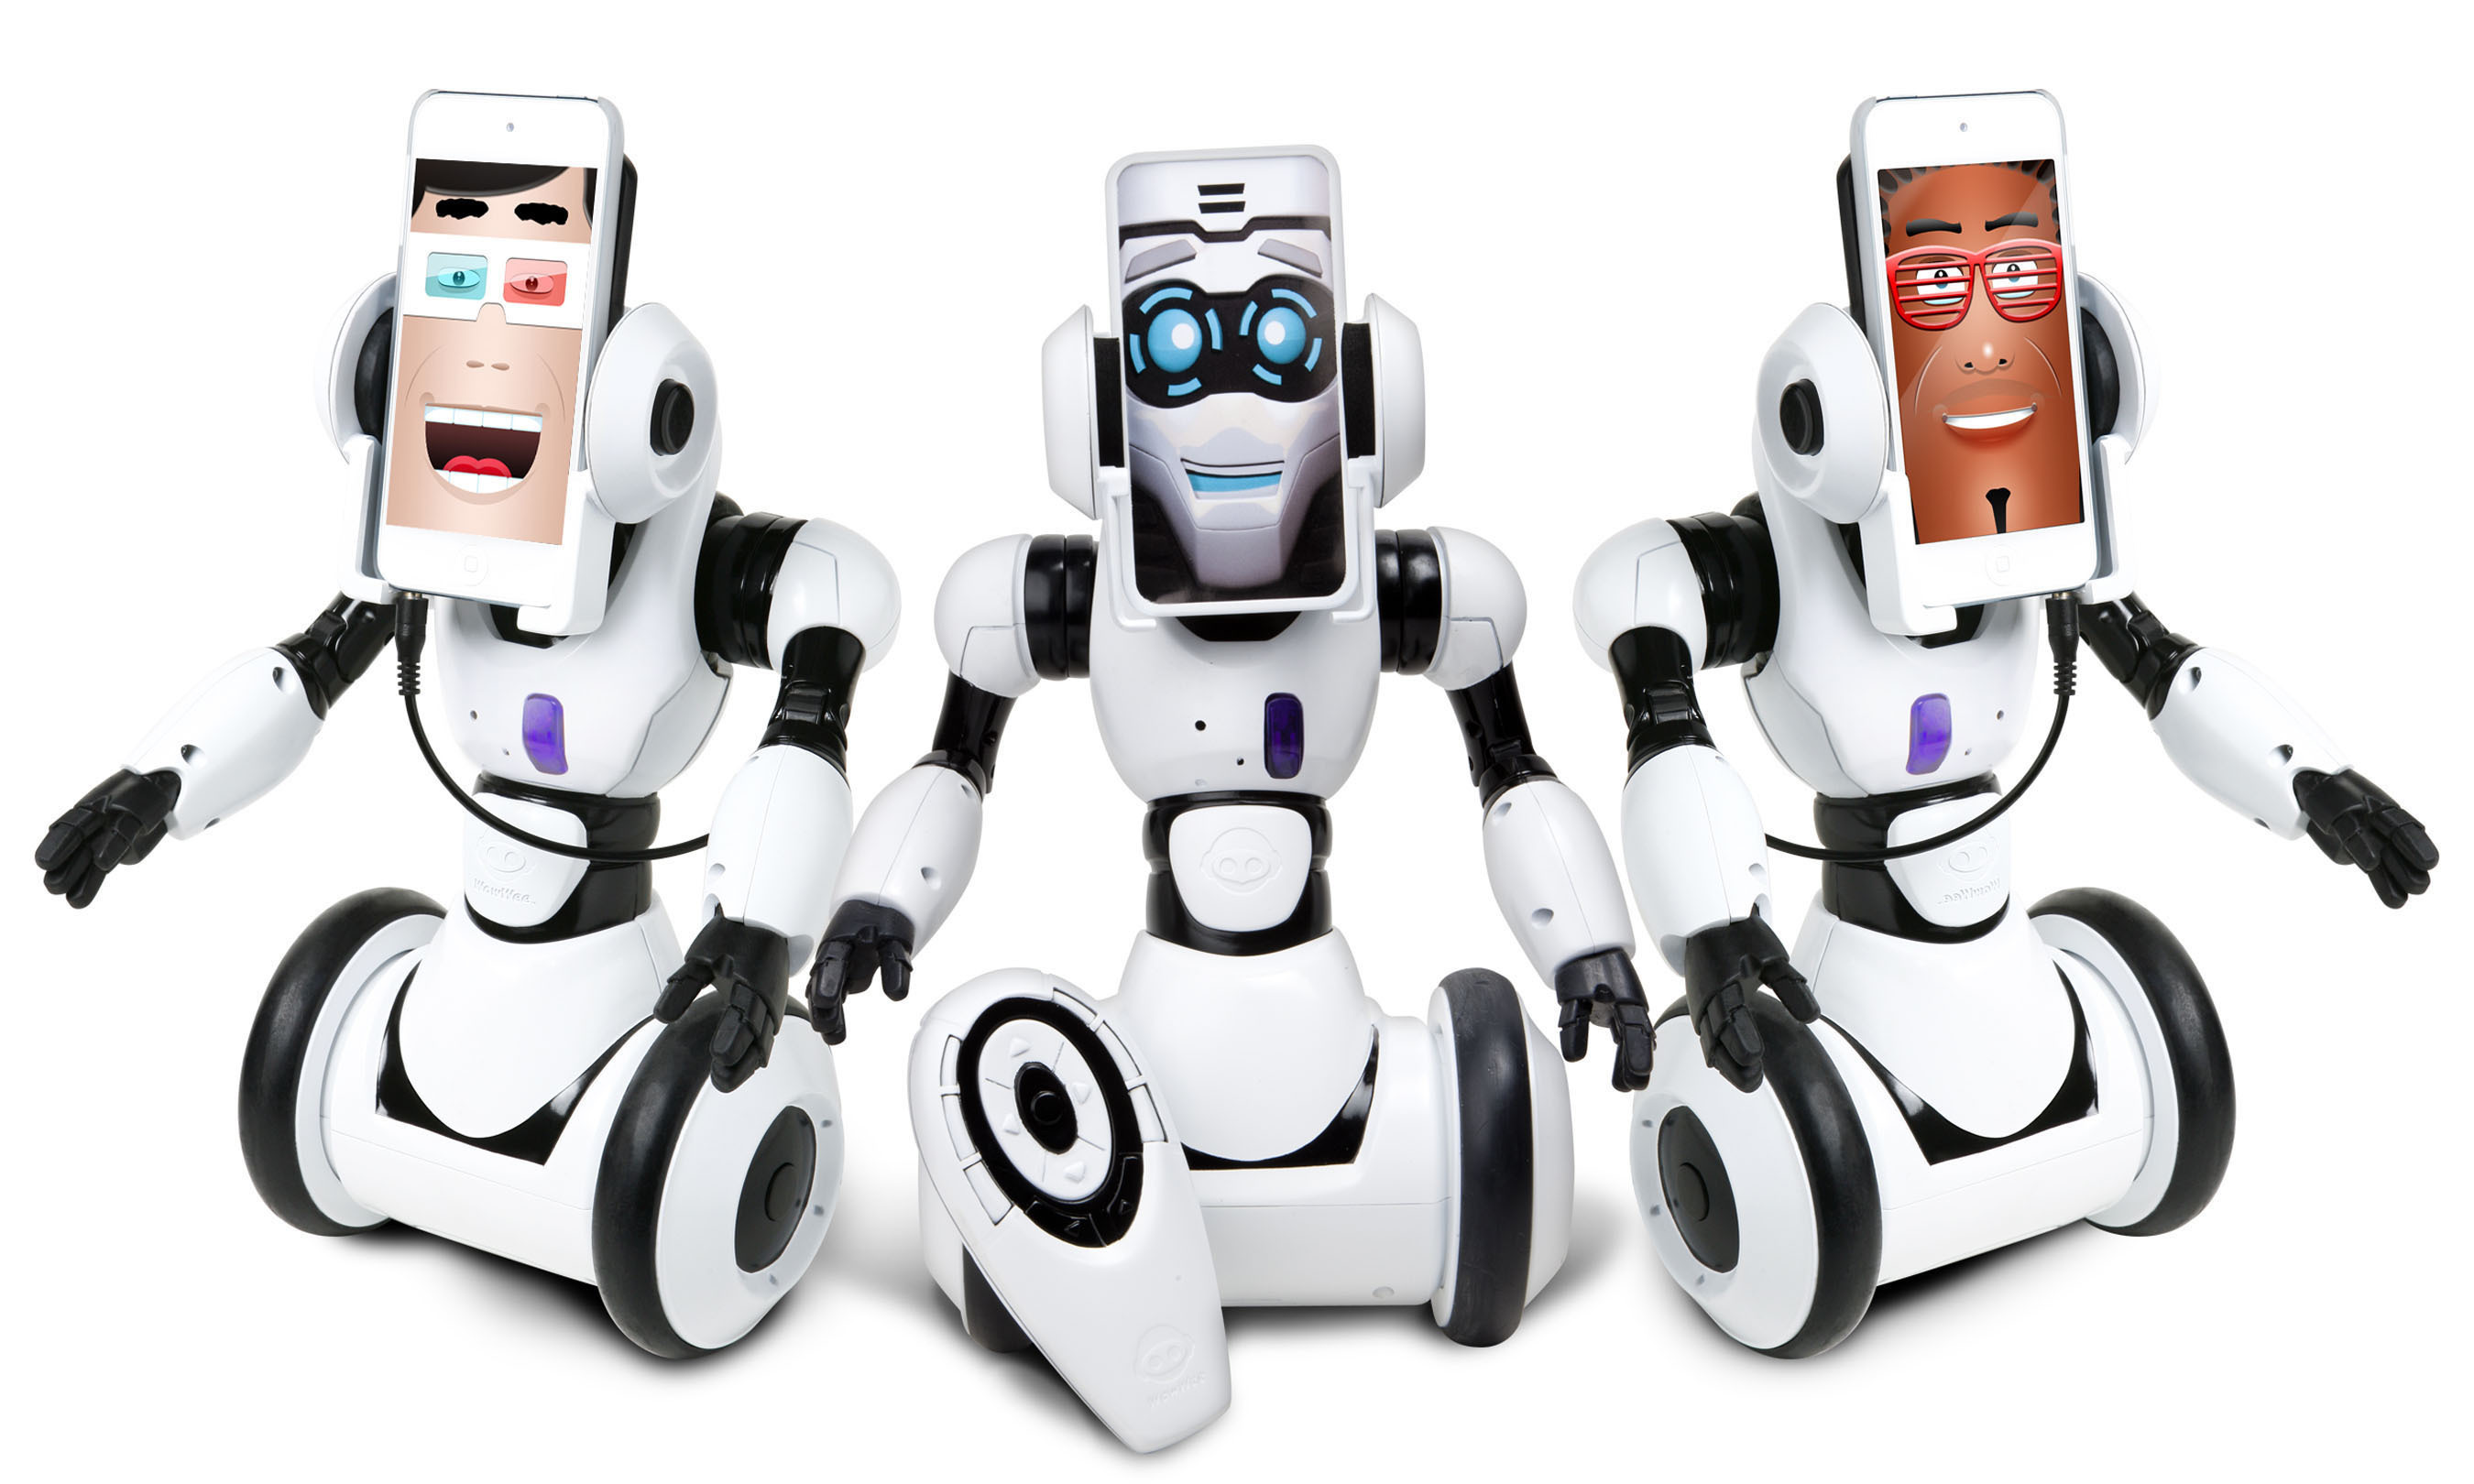 RoboMe by WowWee the latest blend of Personality and Technology. (PRNewsFoto/WowWee) (PRNewsFoto/WOWWEE)